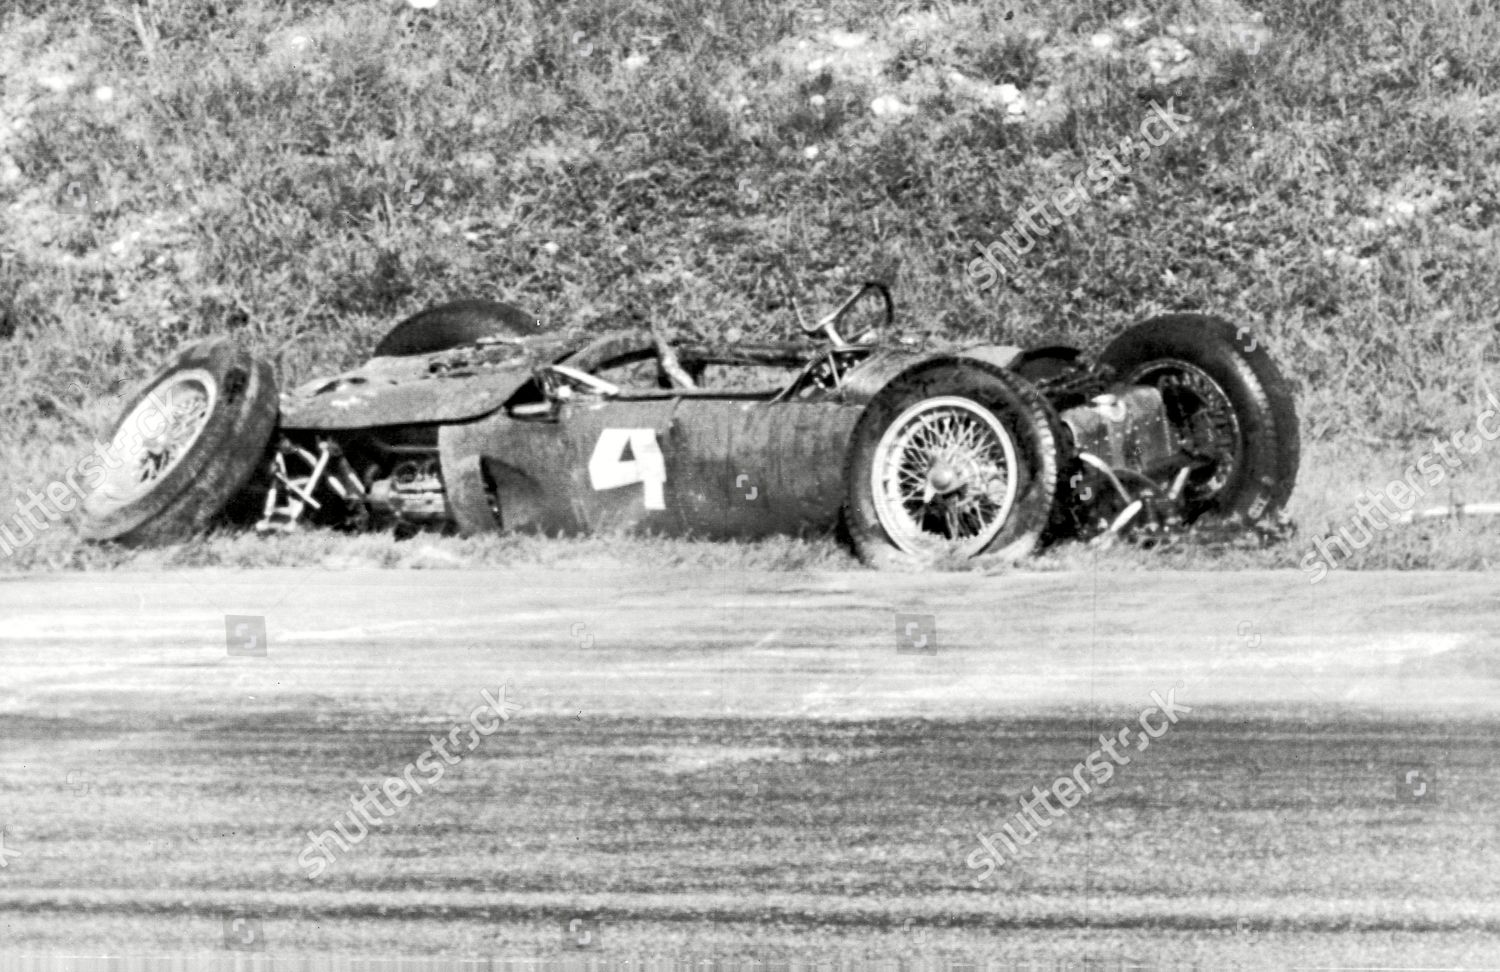 The crash of Monza.